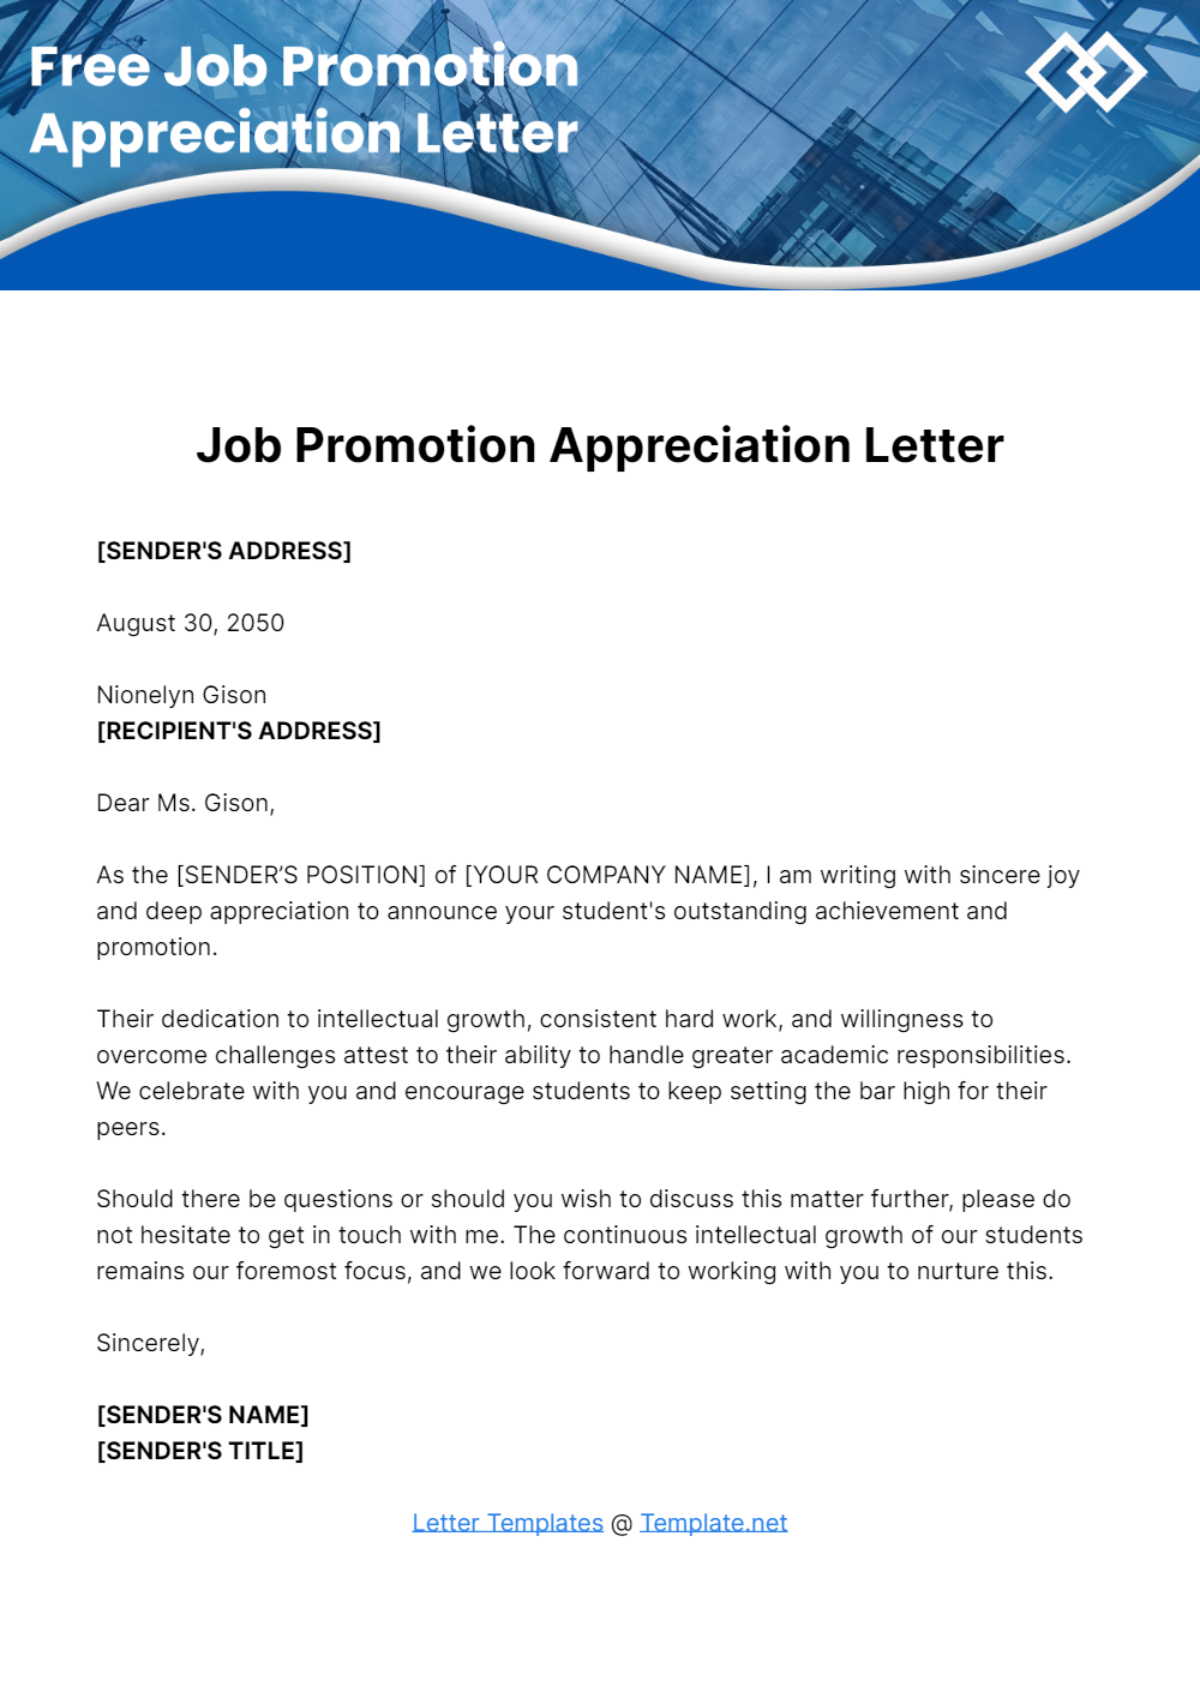 Free Job Promotion Appreciation Letter Template